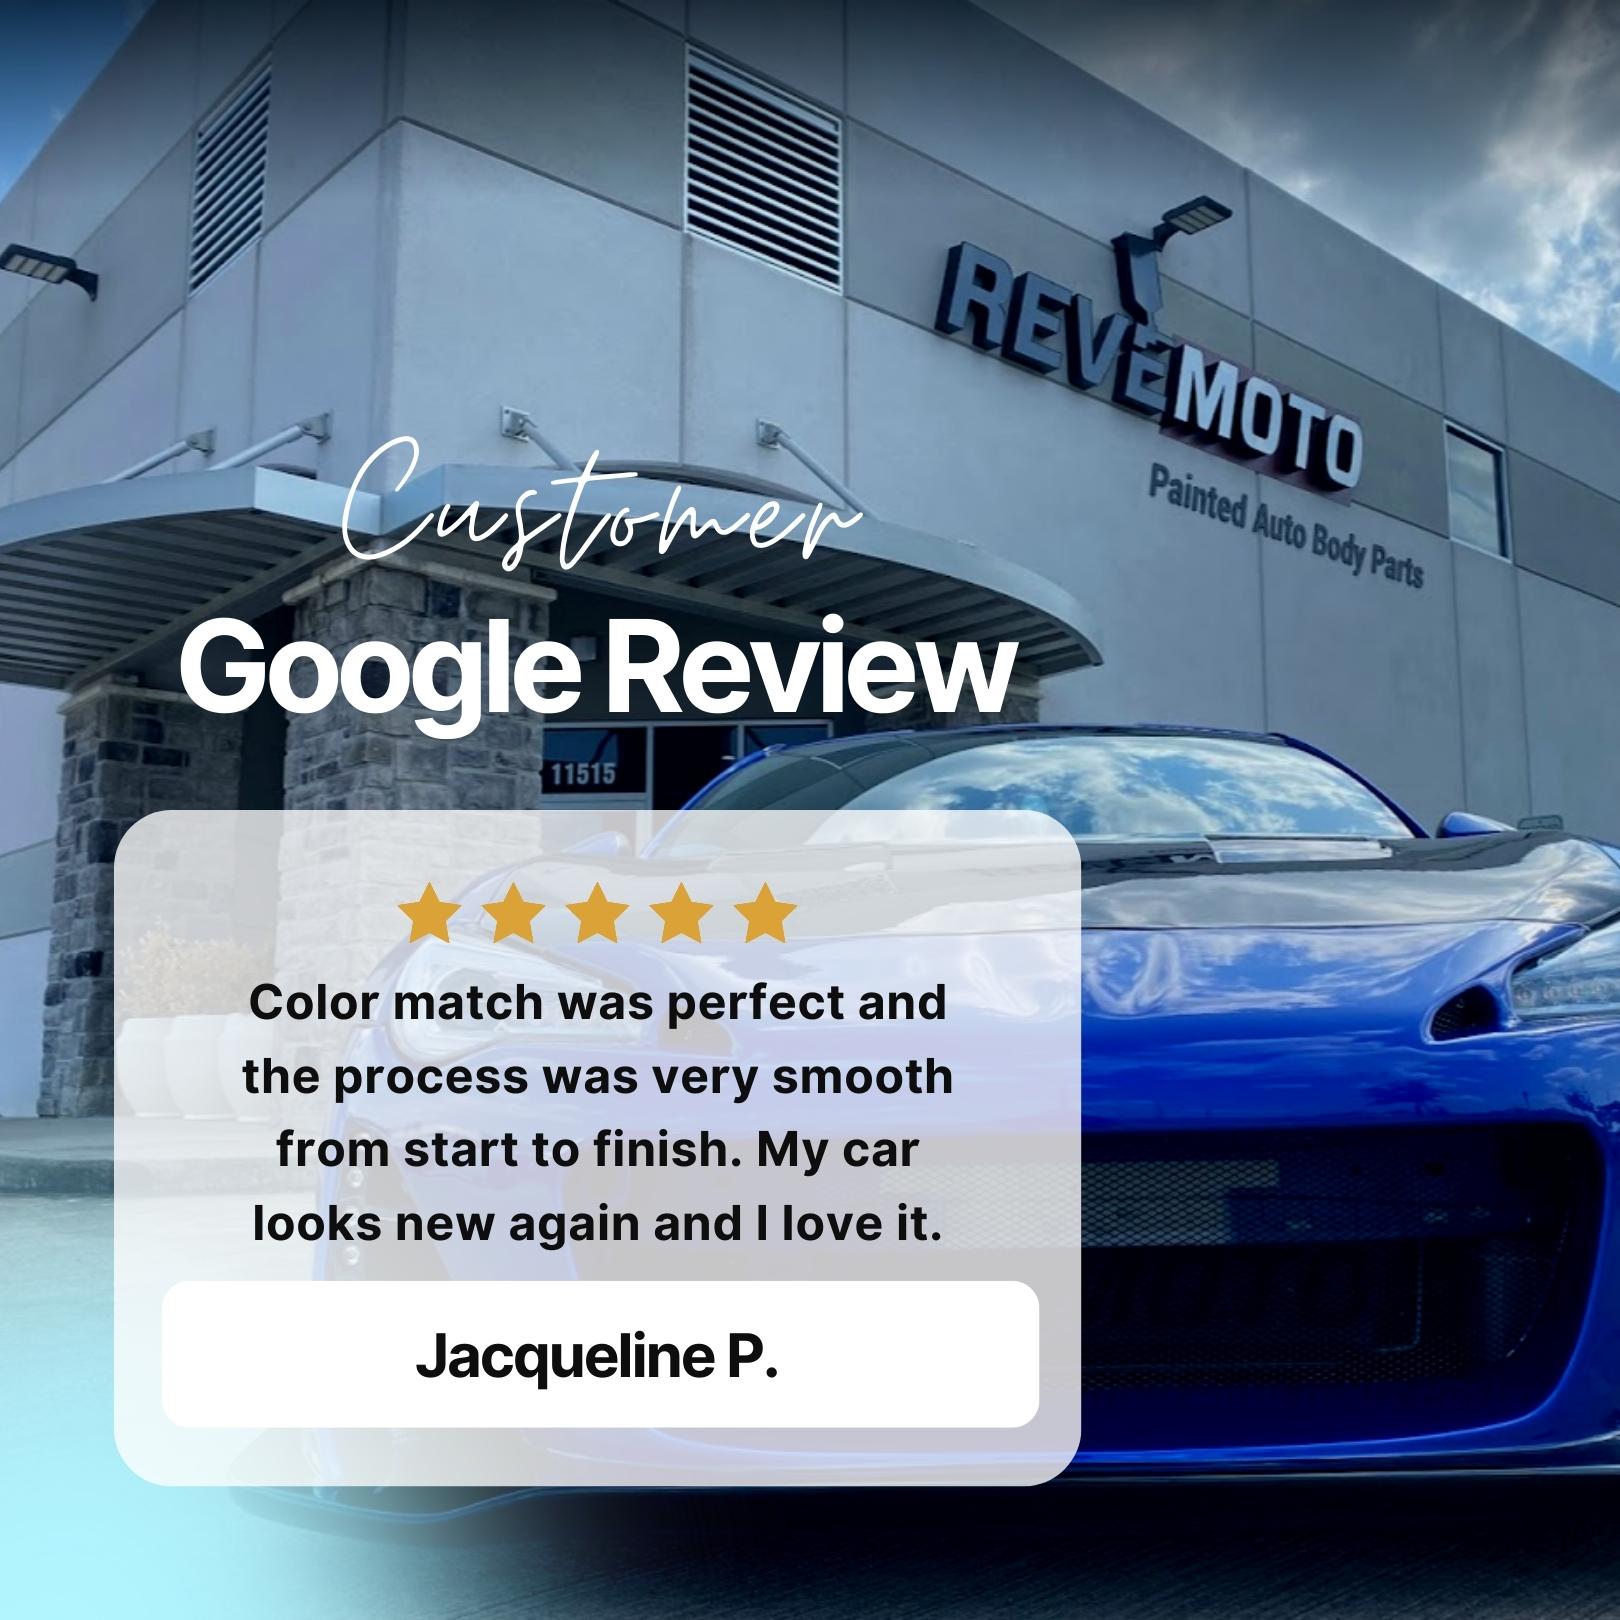 ReveMoto 5-Star Google Review - Customers Love Us!